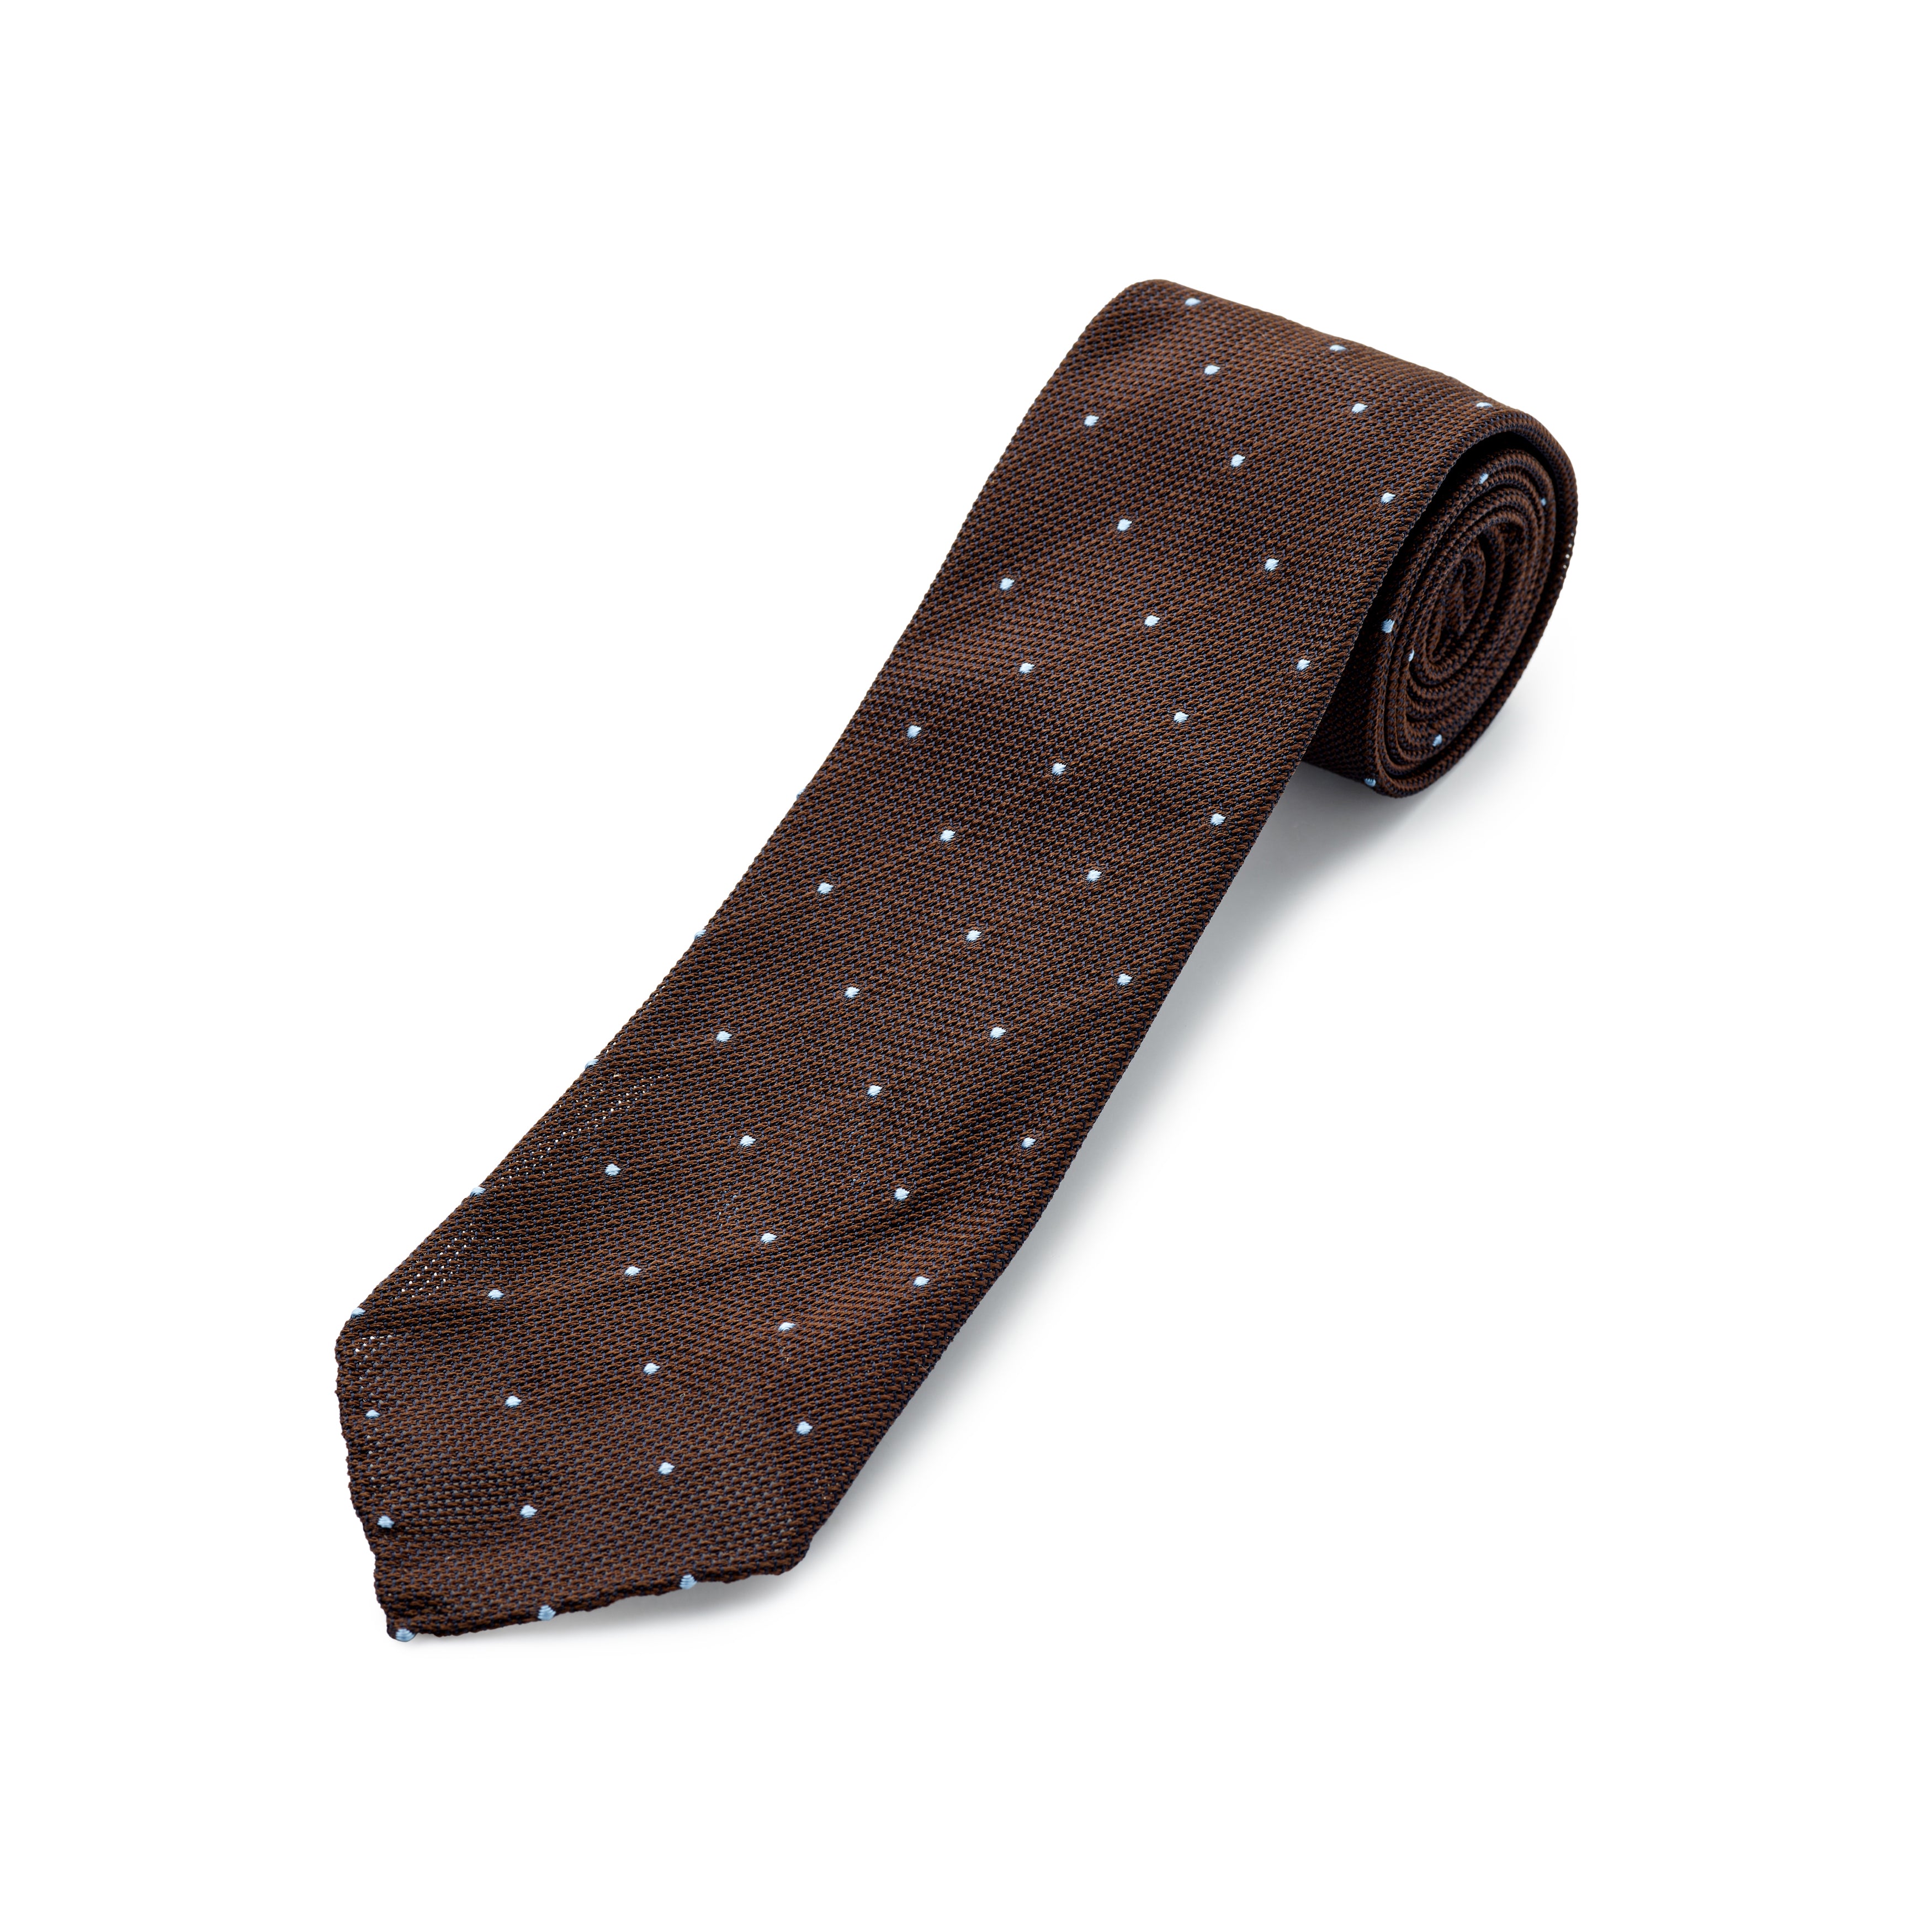 Paolo Albizzati 3 fold Chocolate brown with sky blue polka dot grenadine silk tie